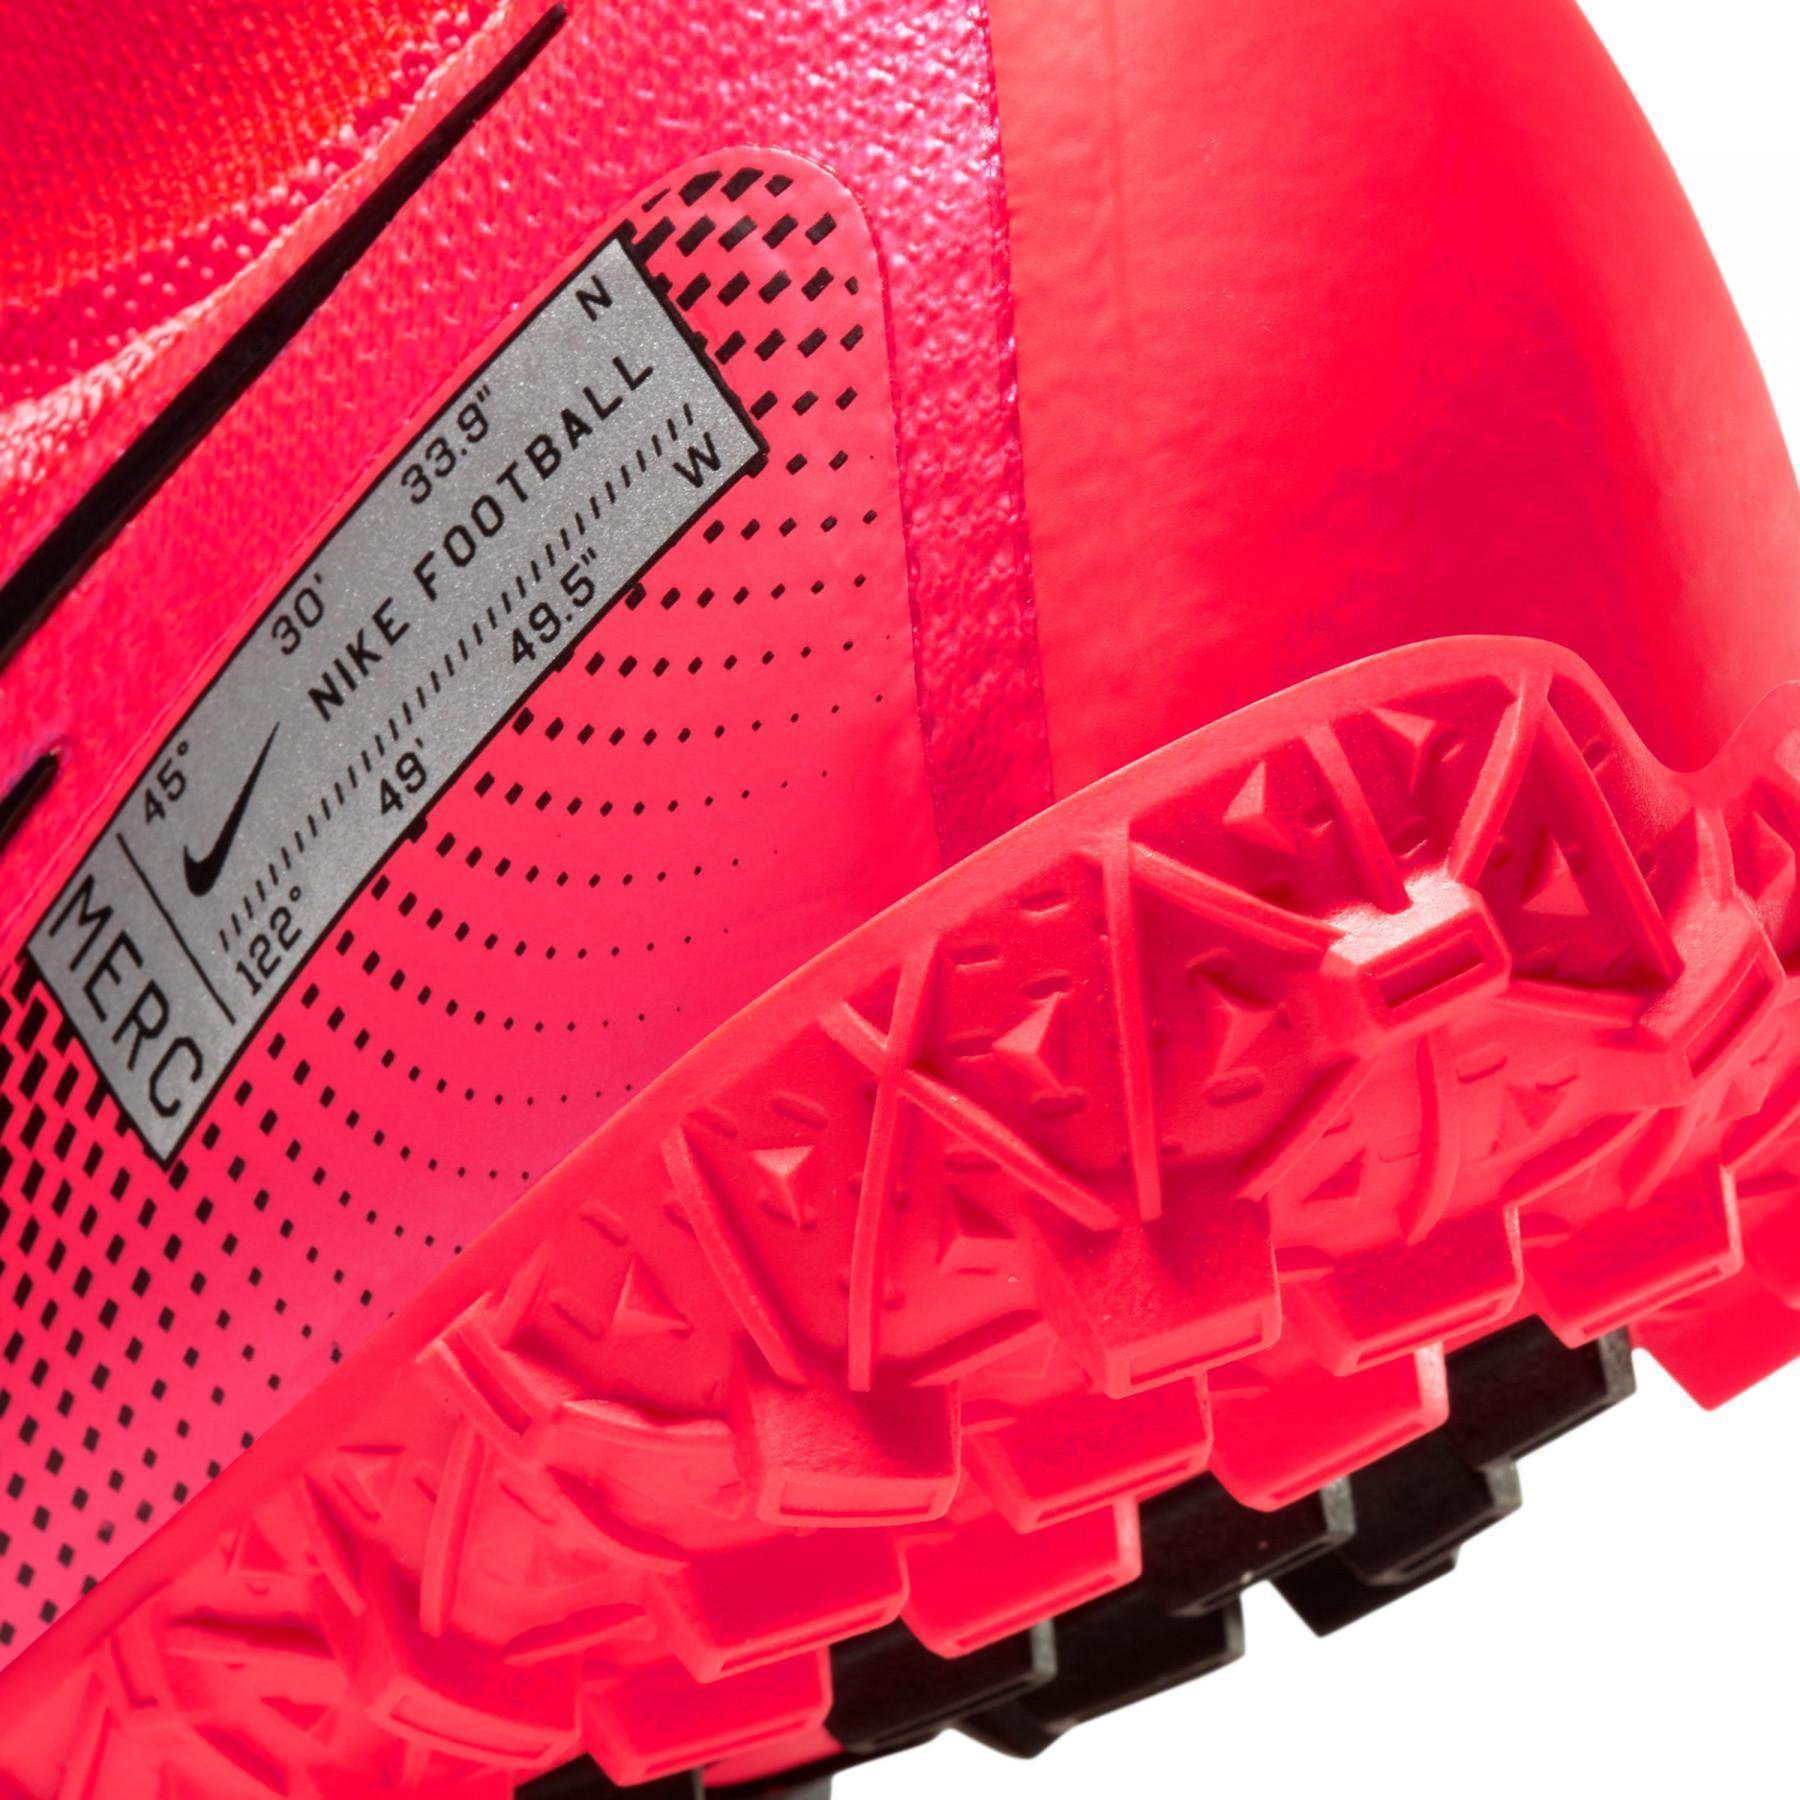 Chaussures de football Nike Mercurial Superfly 7 Élite TF